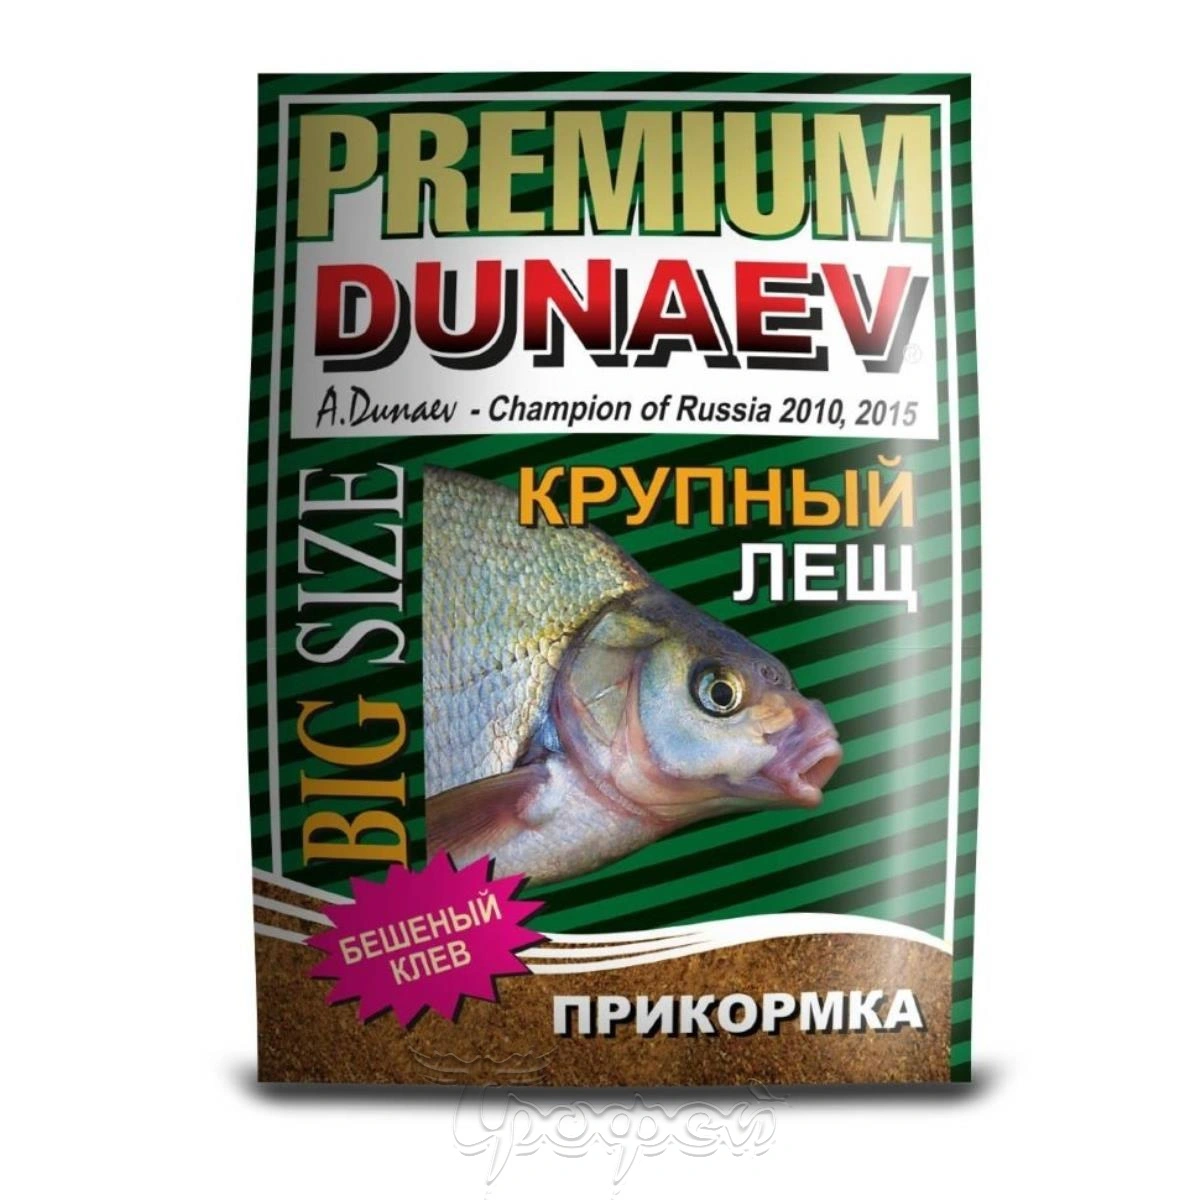 Прикормка купить. Прикормка "Dunaev-Premium" 1кг лещ крупная фракция. Прикормка "Dunaev-Premium" крупная фракция, 1 кг. Крупный лещ прикормка Дунаев премиум. Dunaev Premium крупный лещ.